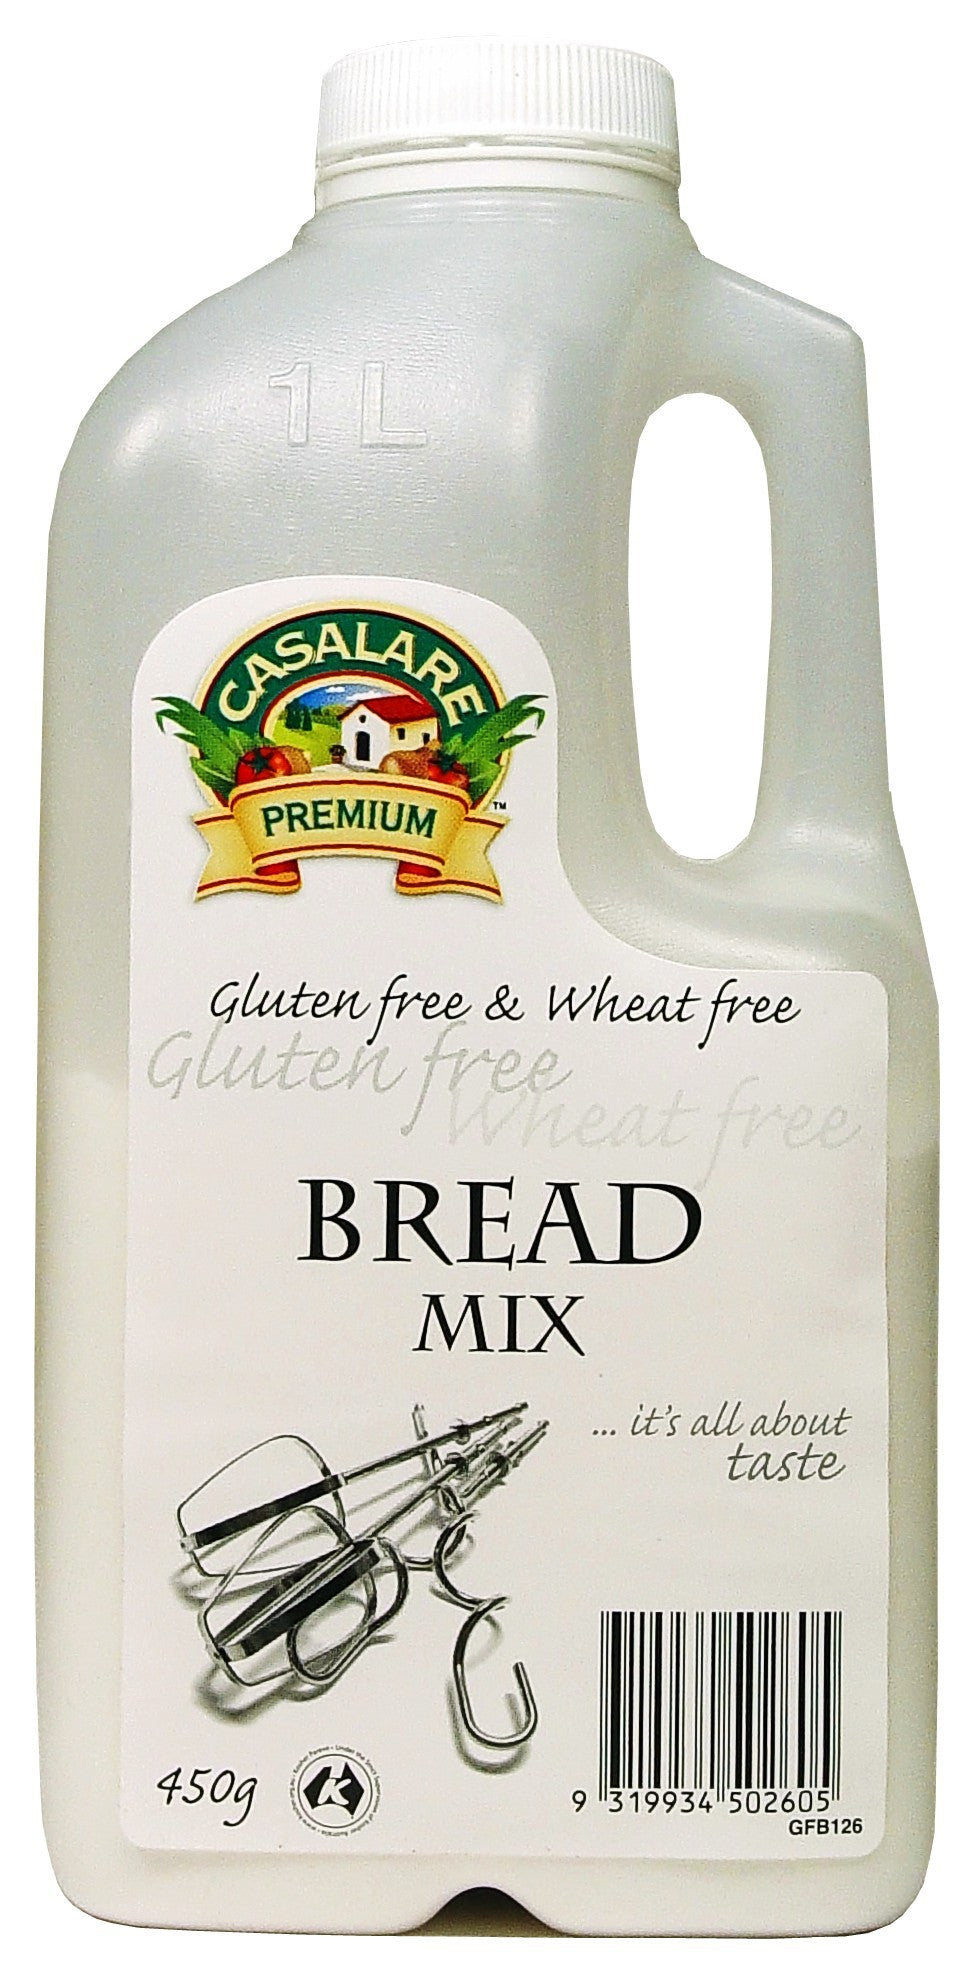 Casalare, Bread Mix, Gluten Free & Wheat Free, 450 g